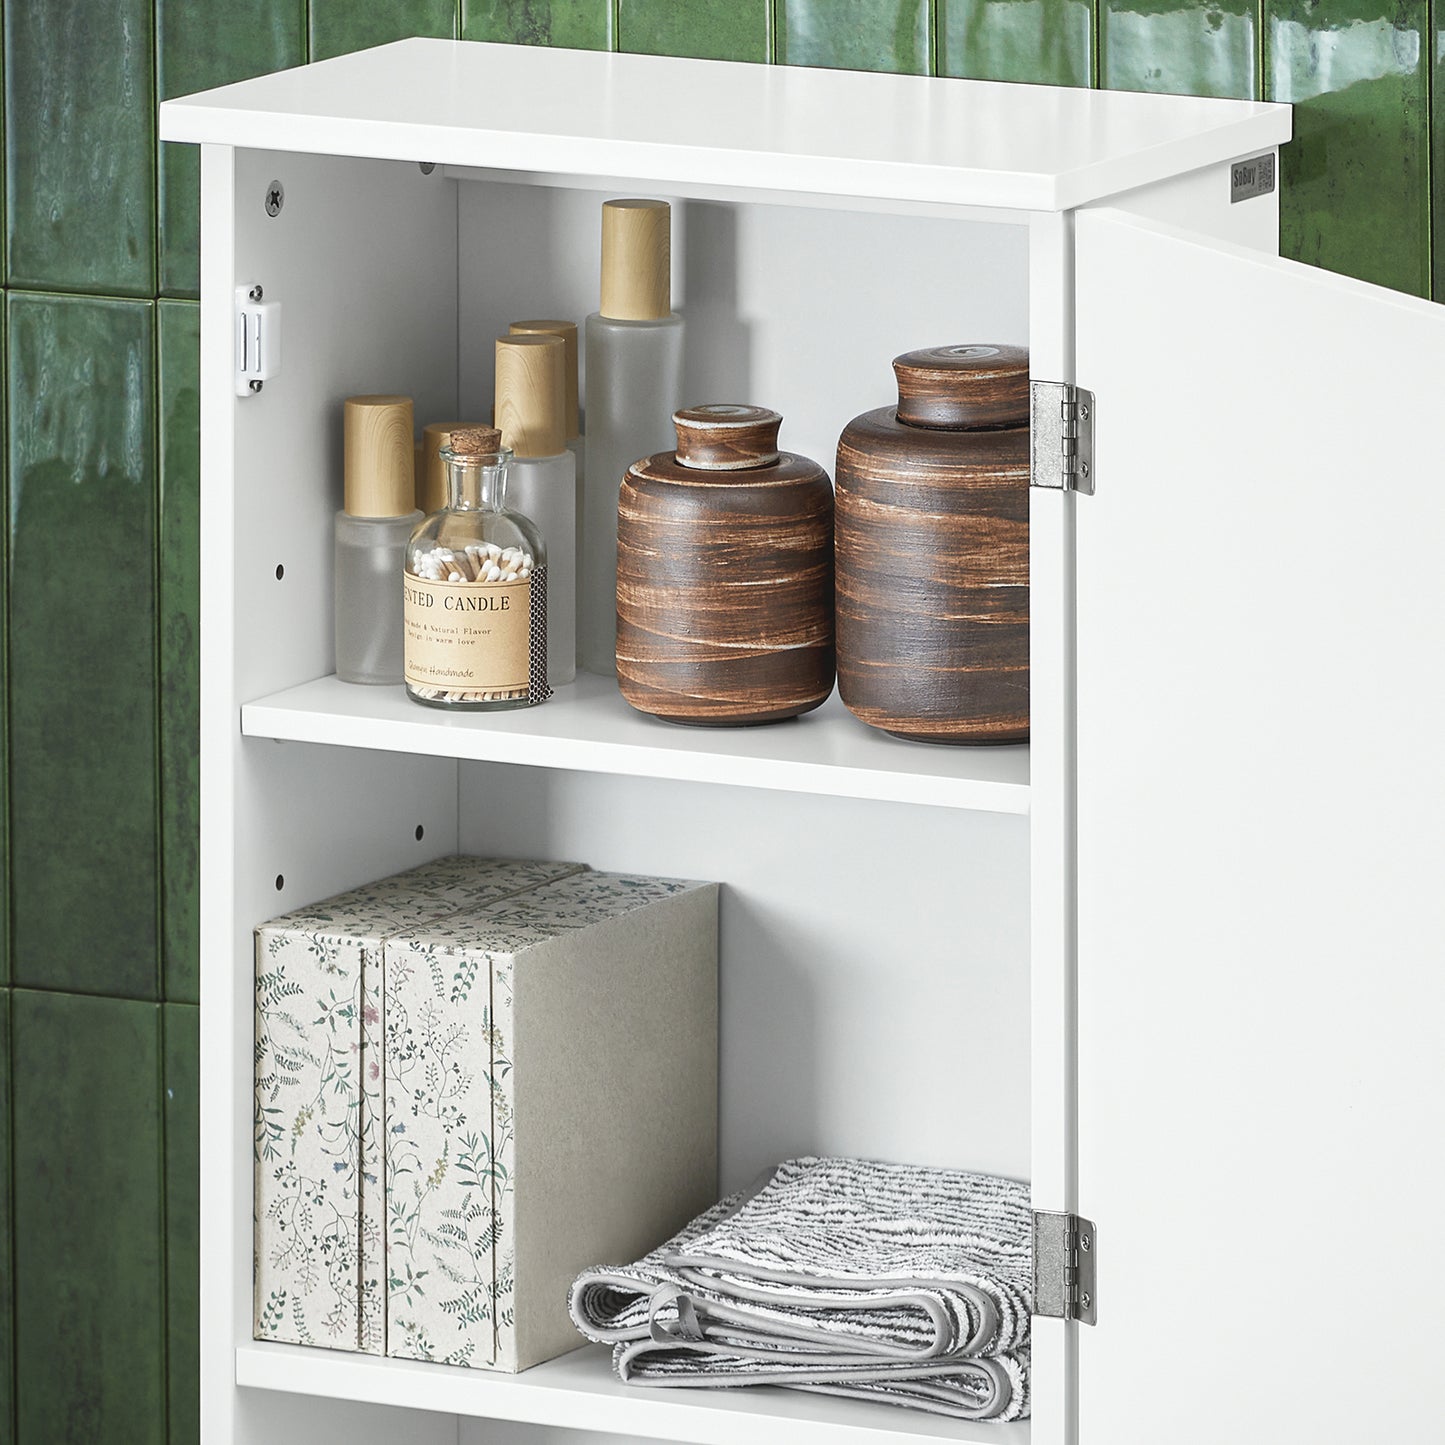 SoBuy Wall Mounted Single Door Bathroom Storage Cabinet Medicine Cabinet White